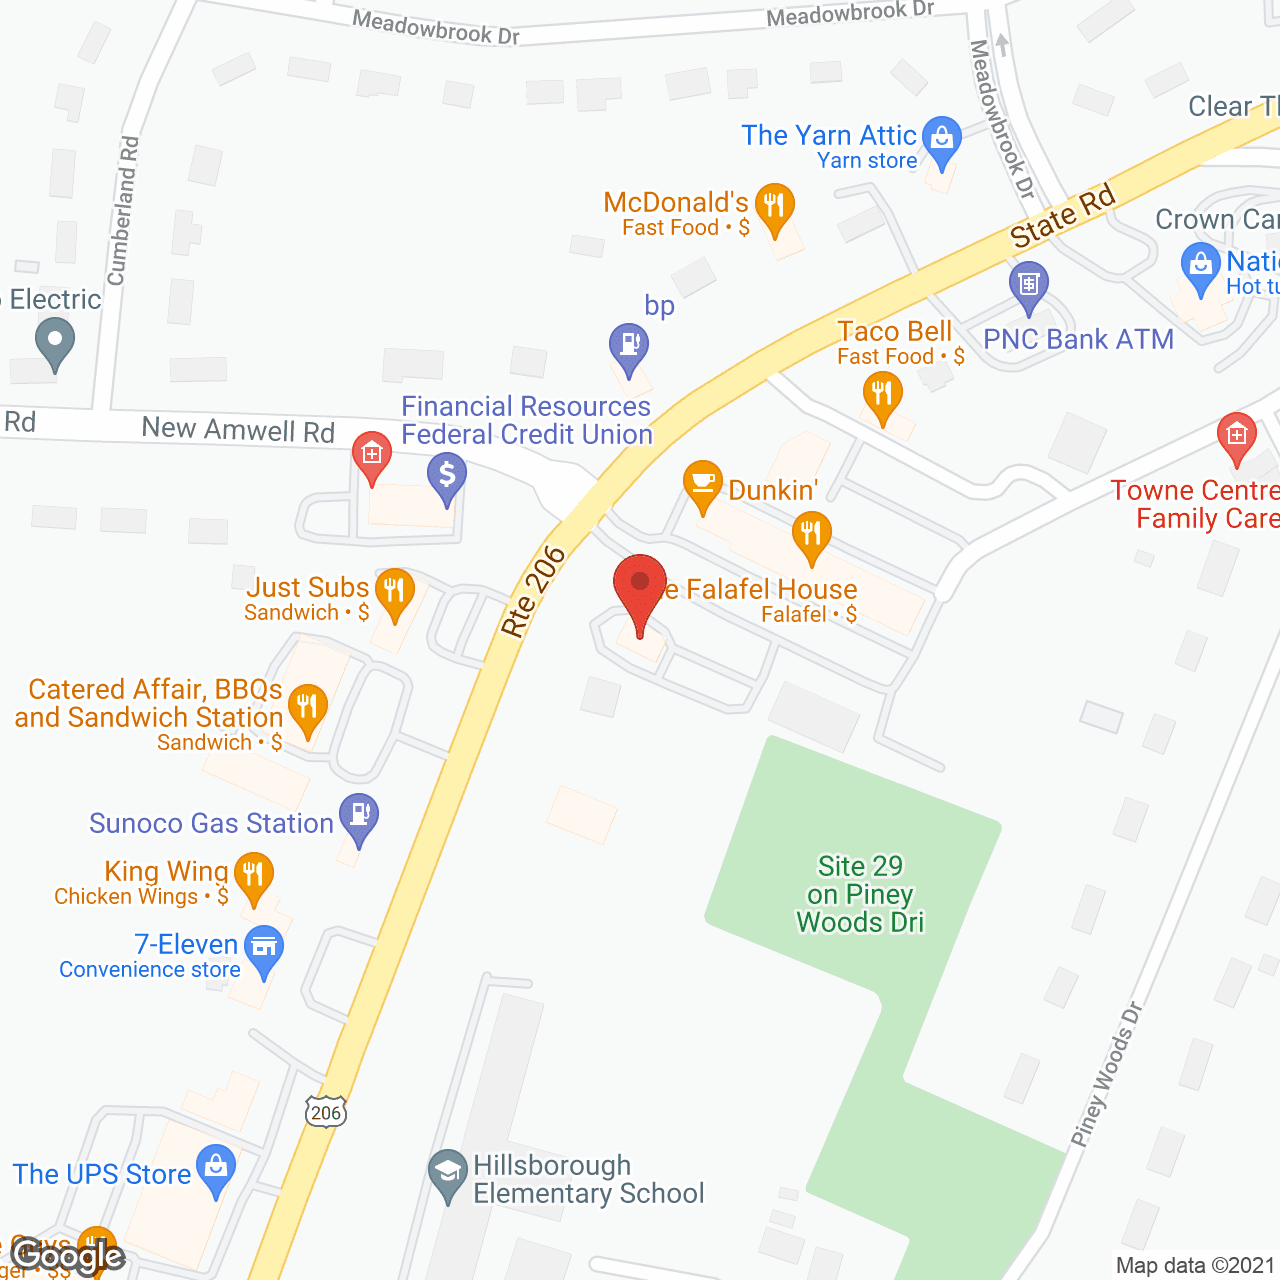 Turo Care in google map